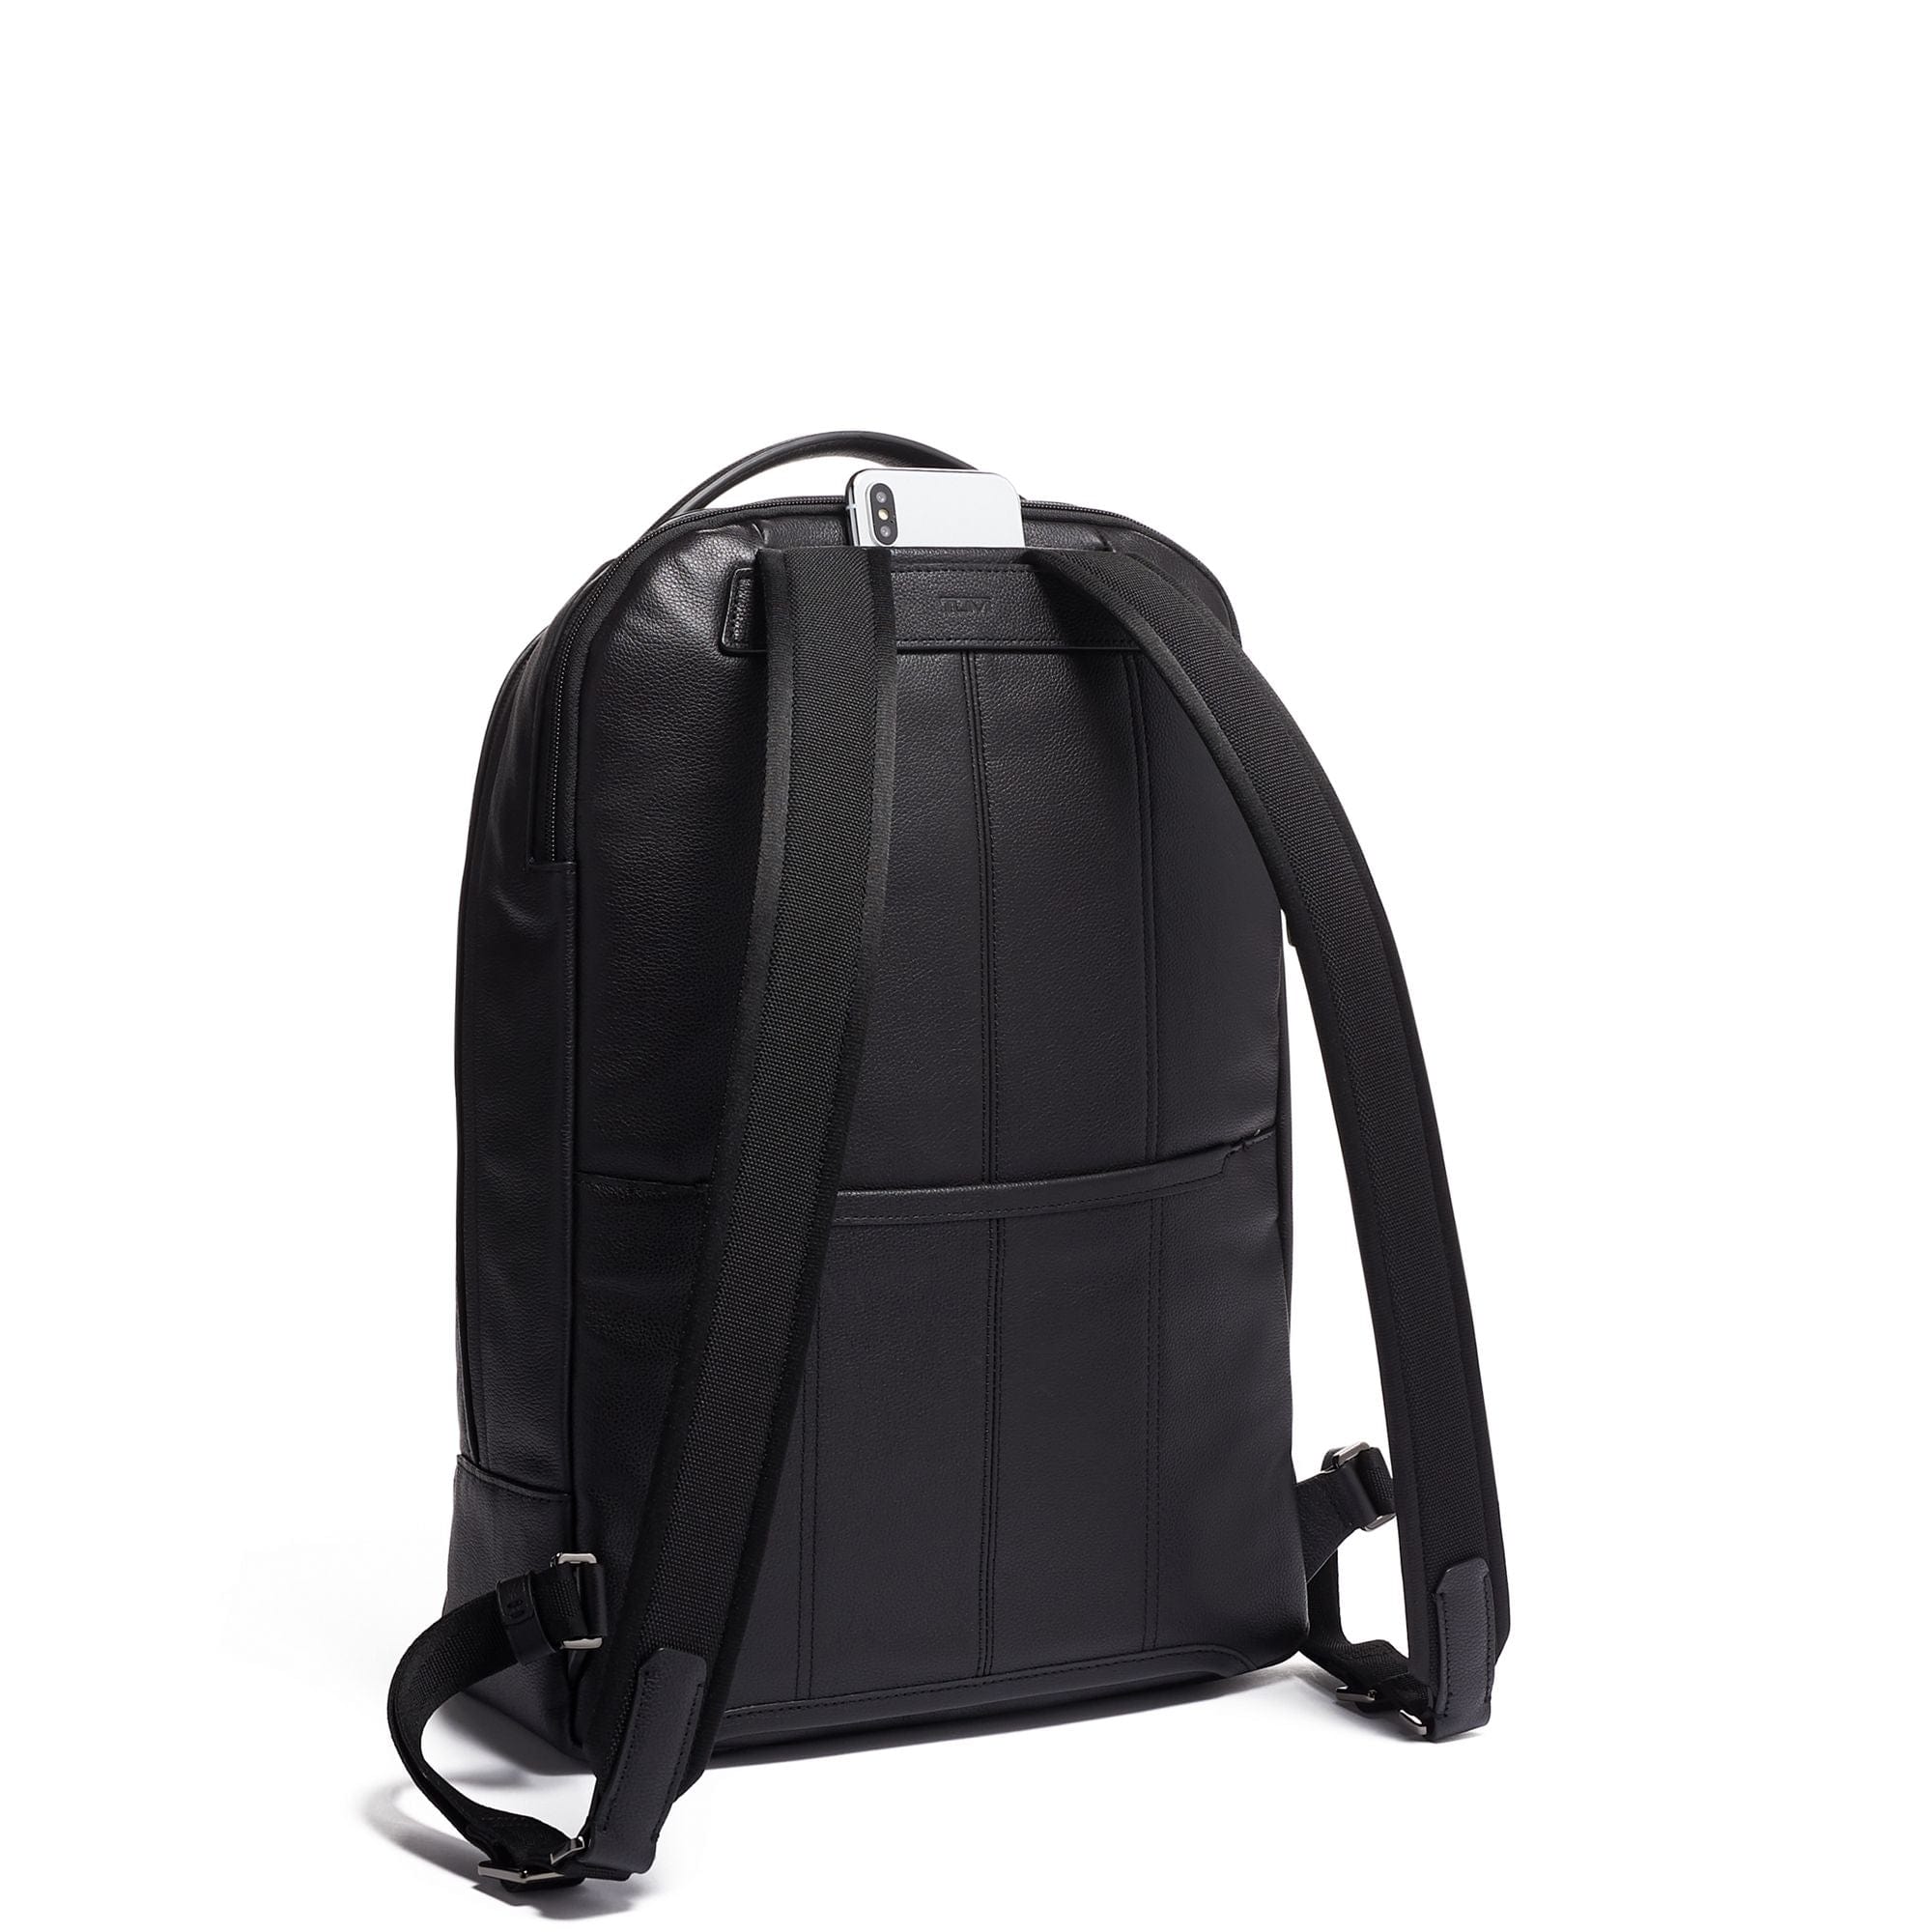 Shop Warren Backpack Leather by TUMI UAE - TUMI